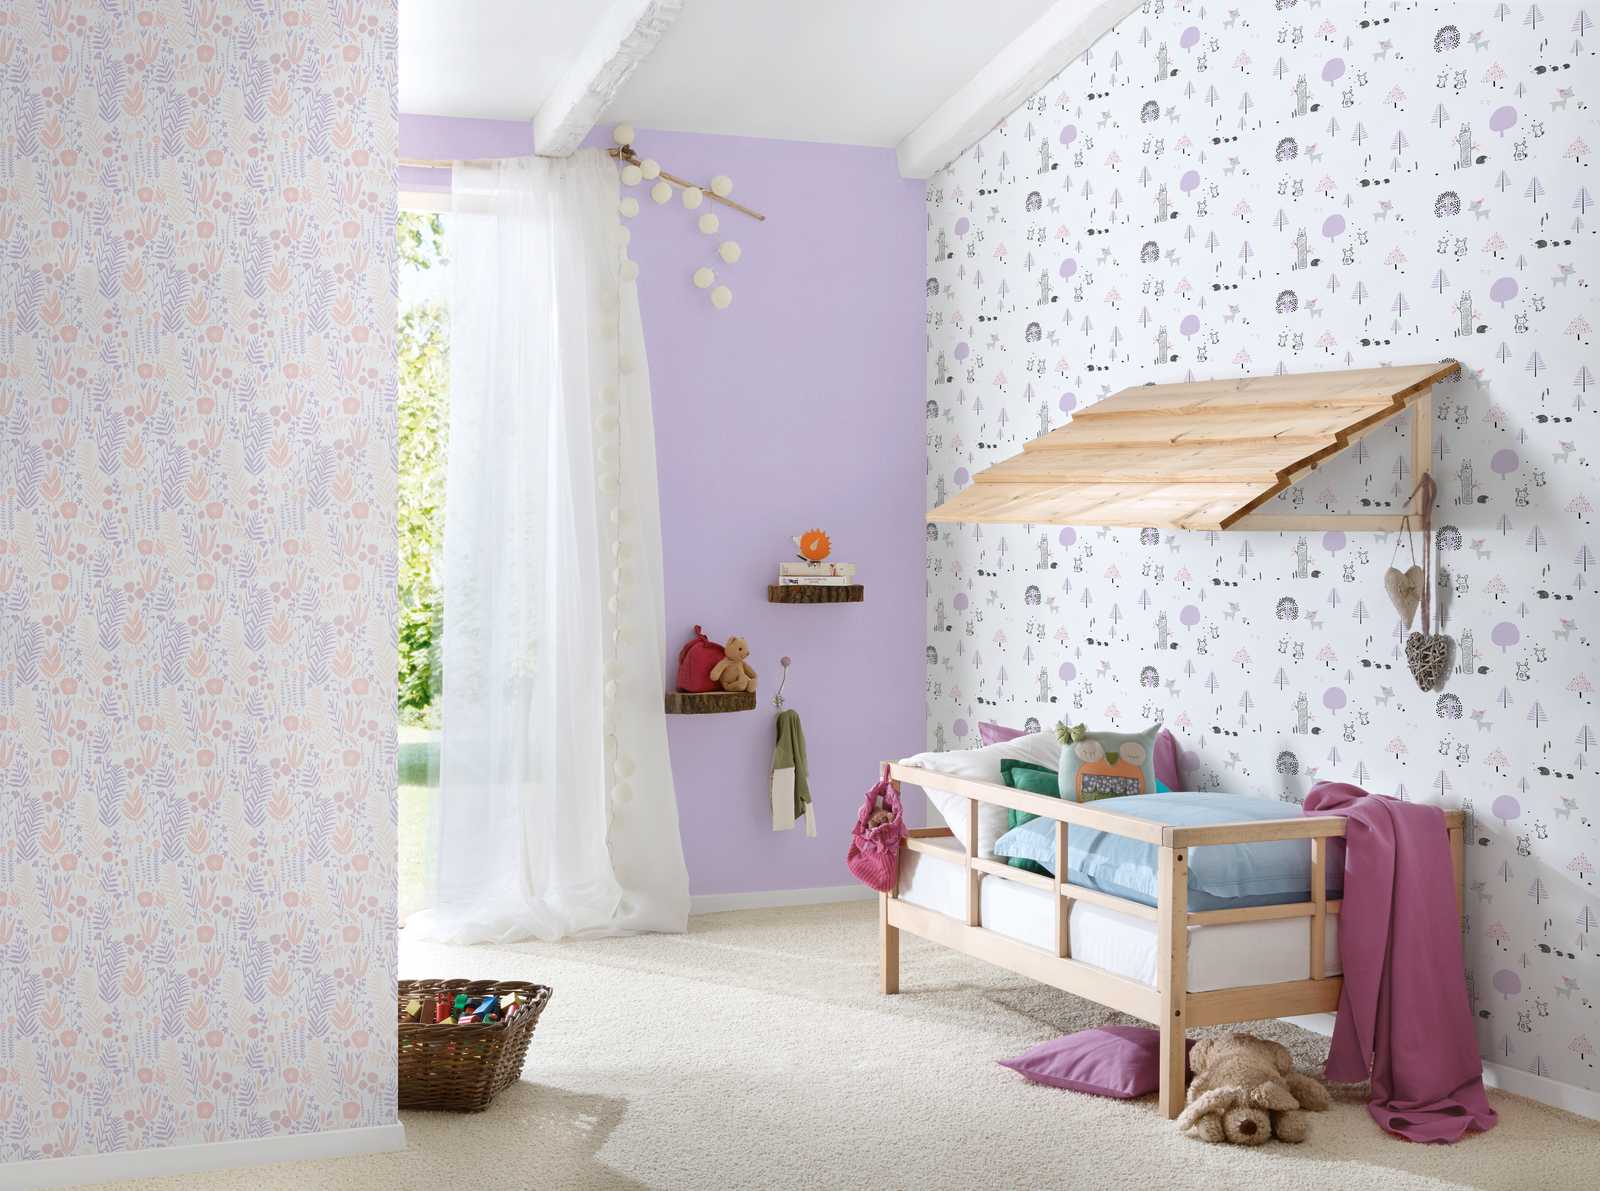             Girls room wallpaper plants - purple, pink, white
        